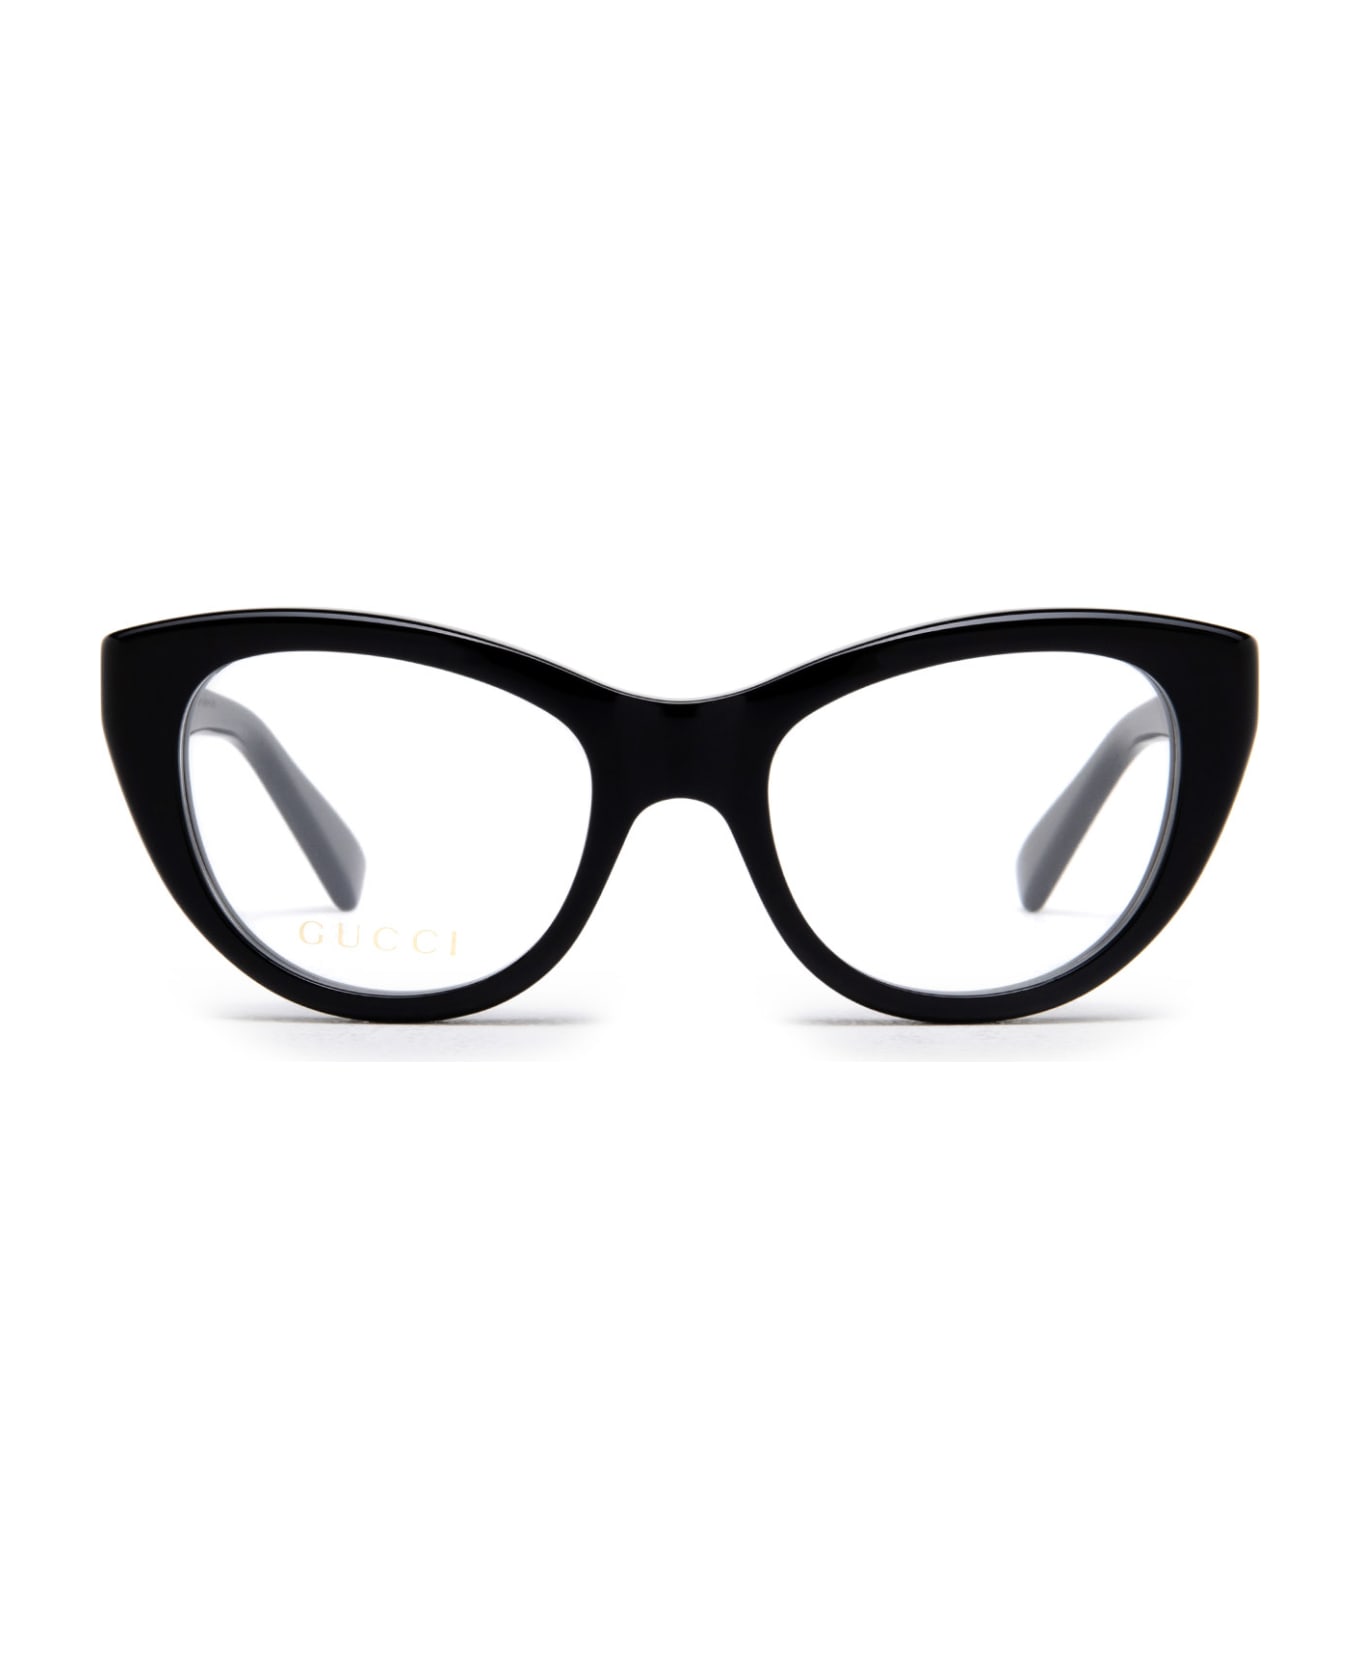 Gucci Eyewear Gg1172o Black Glasses - Black アイウェア